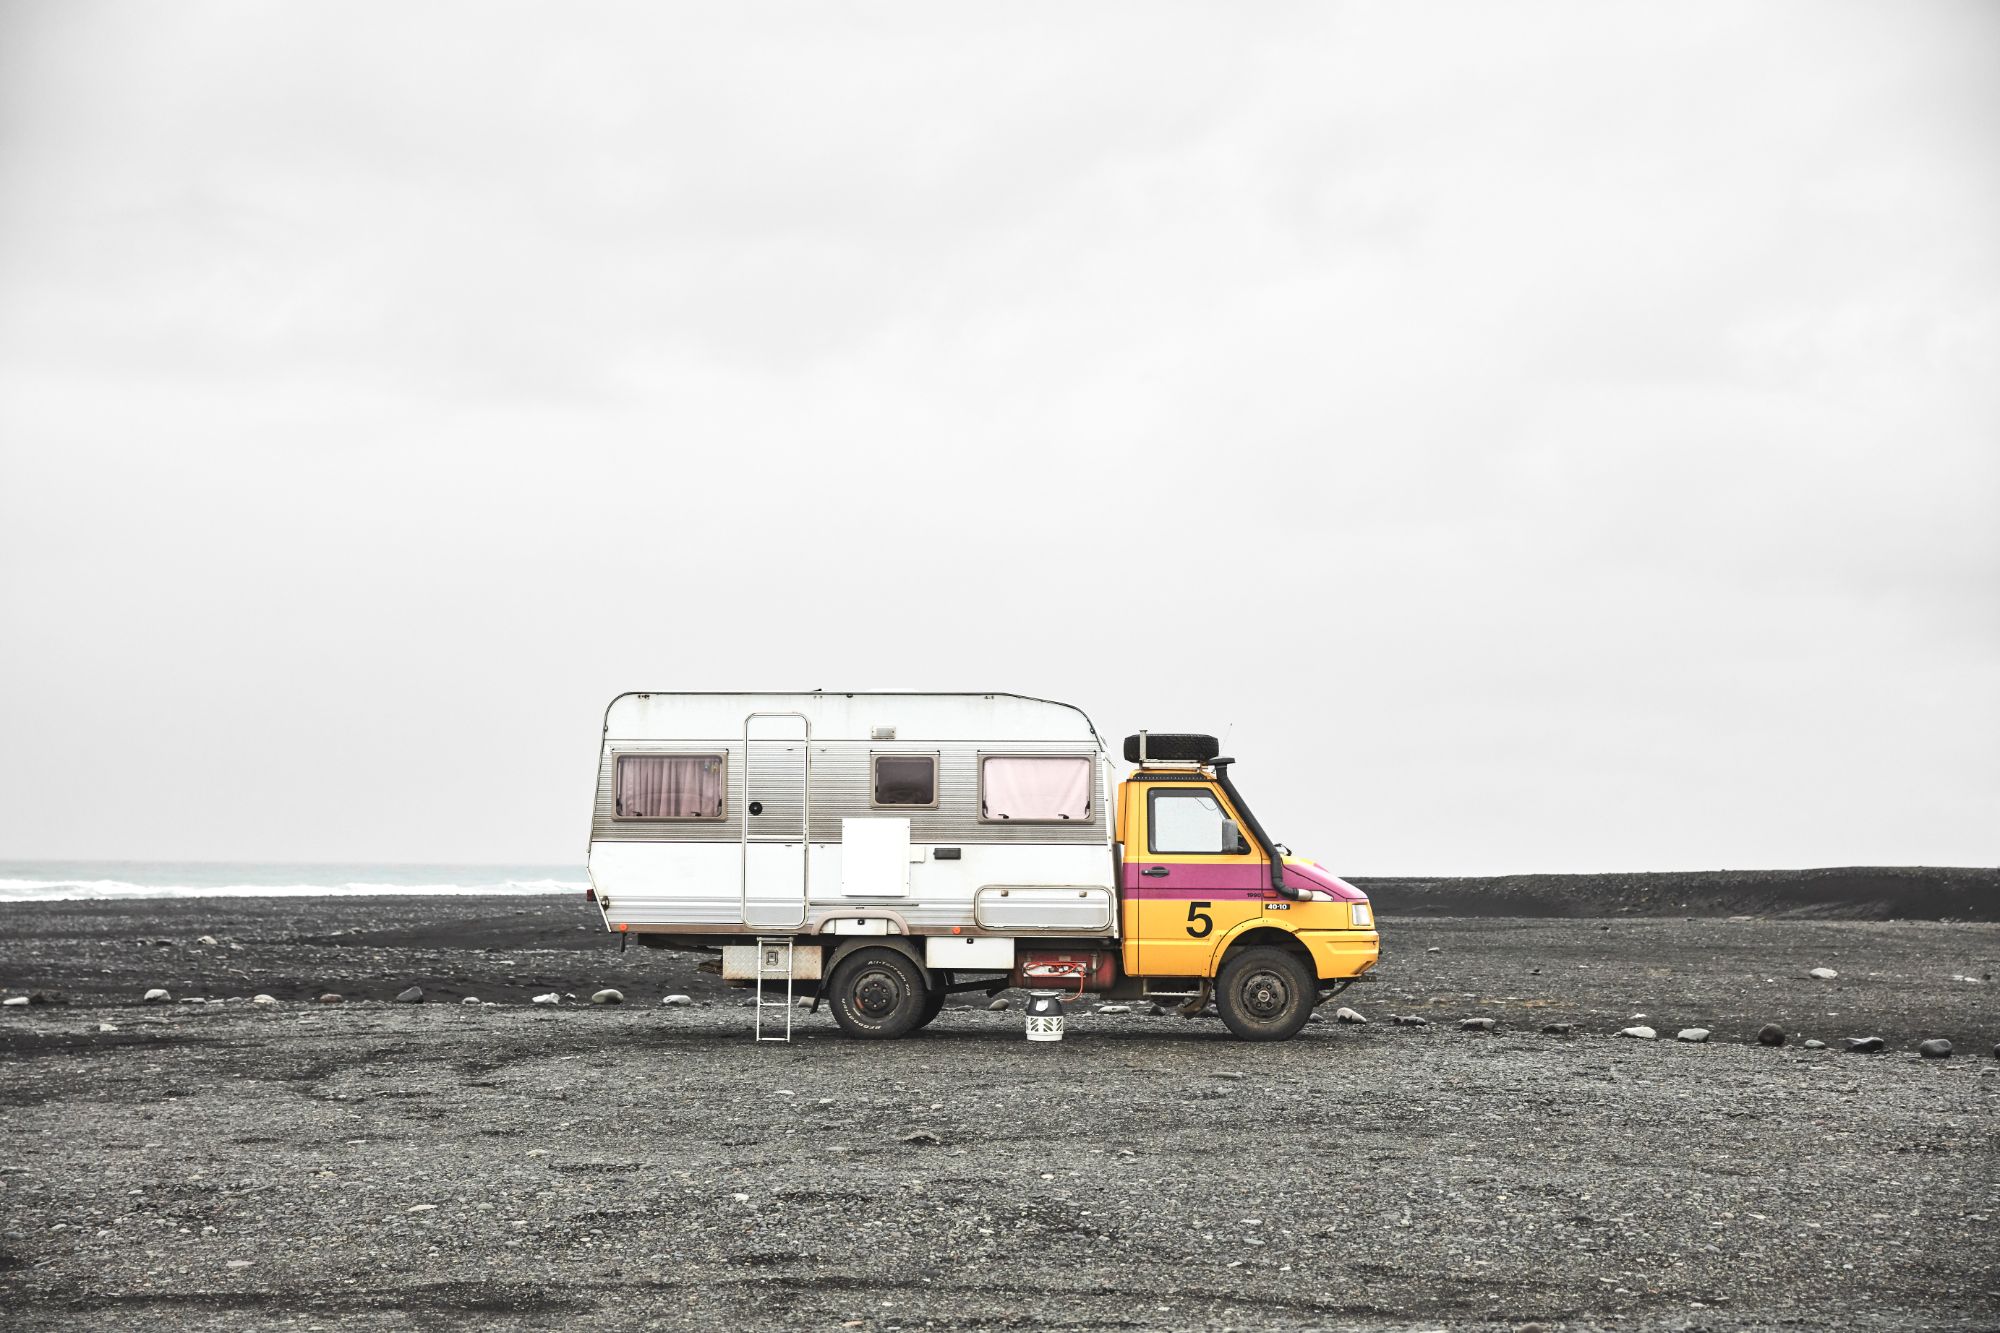 Campervan on Iceland beach.